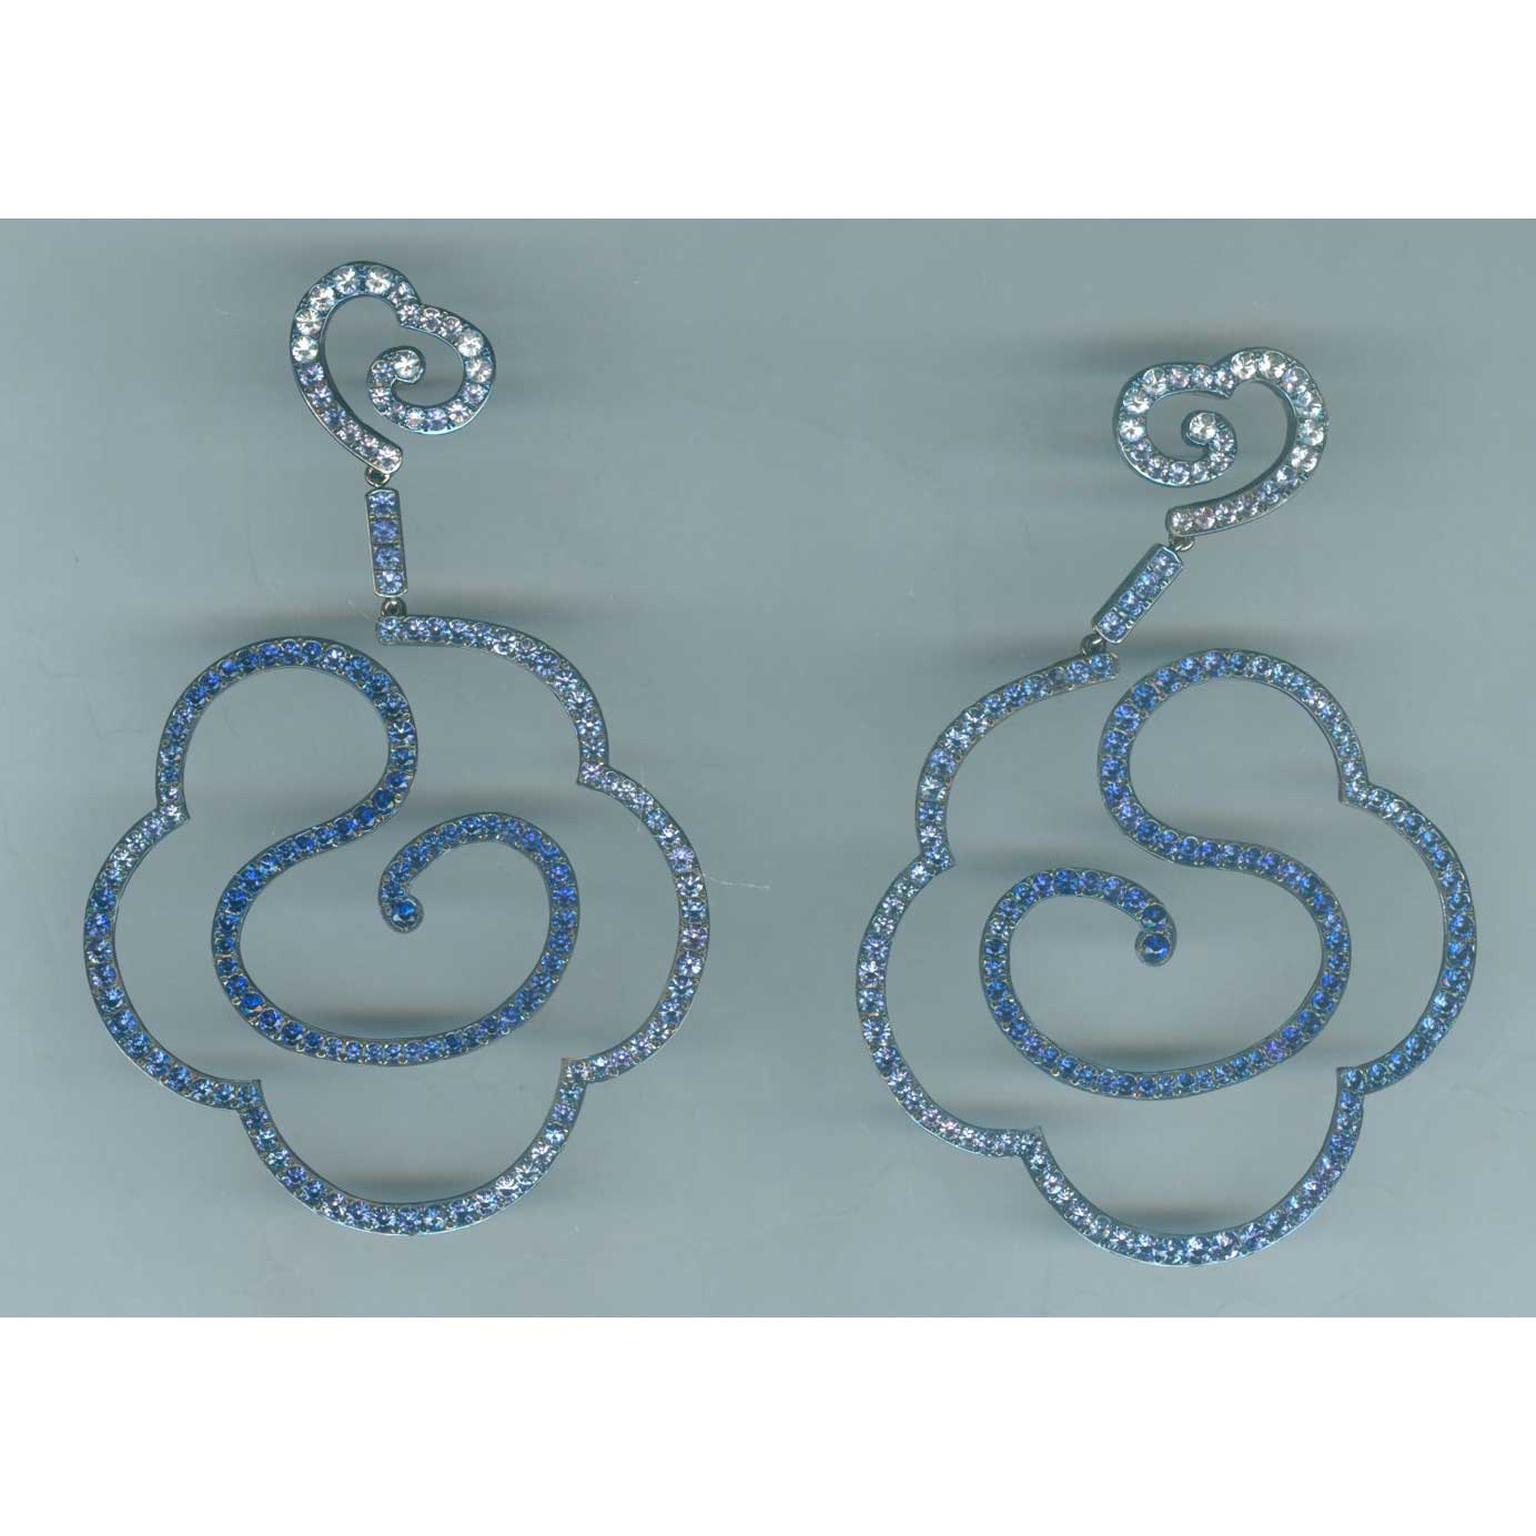 Carnet sapphire and diamond cloud earrings